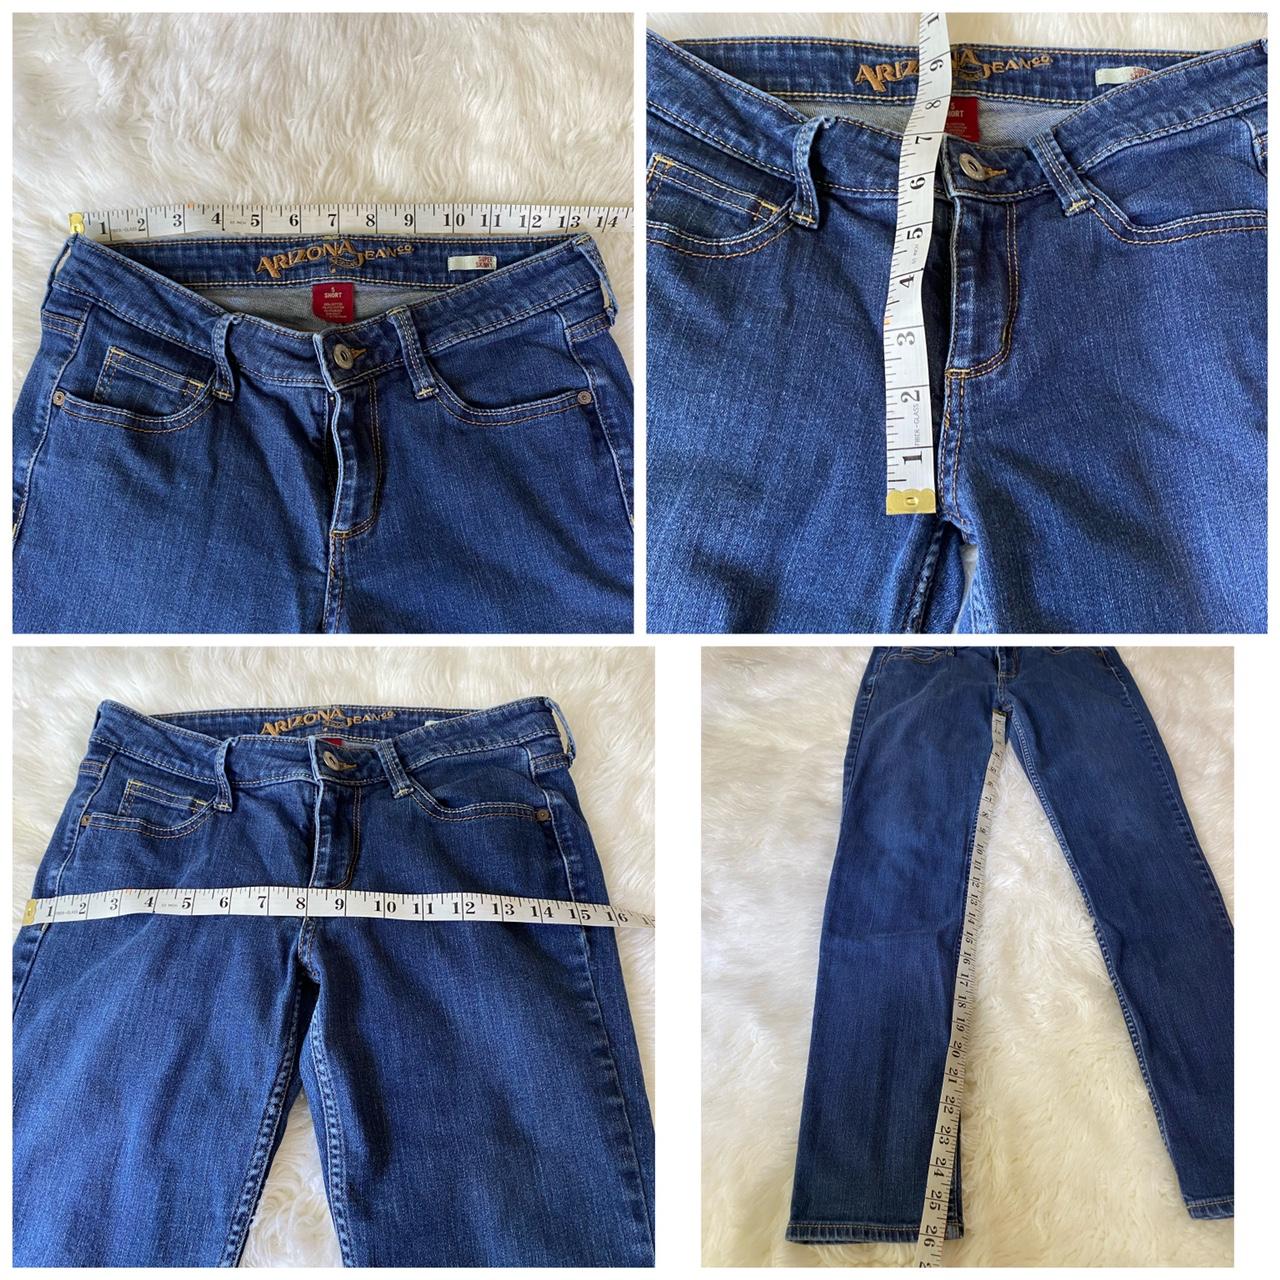 Arizona jeans super skinny - Rest... 92% rn#93677 Depop cotton